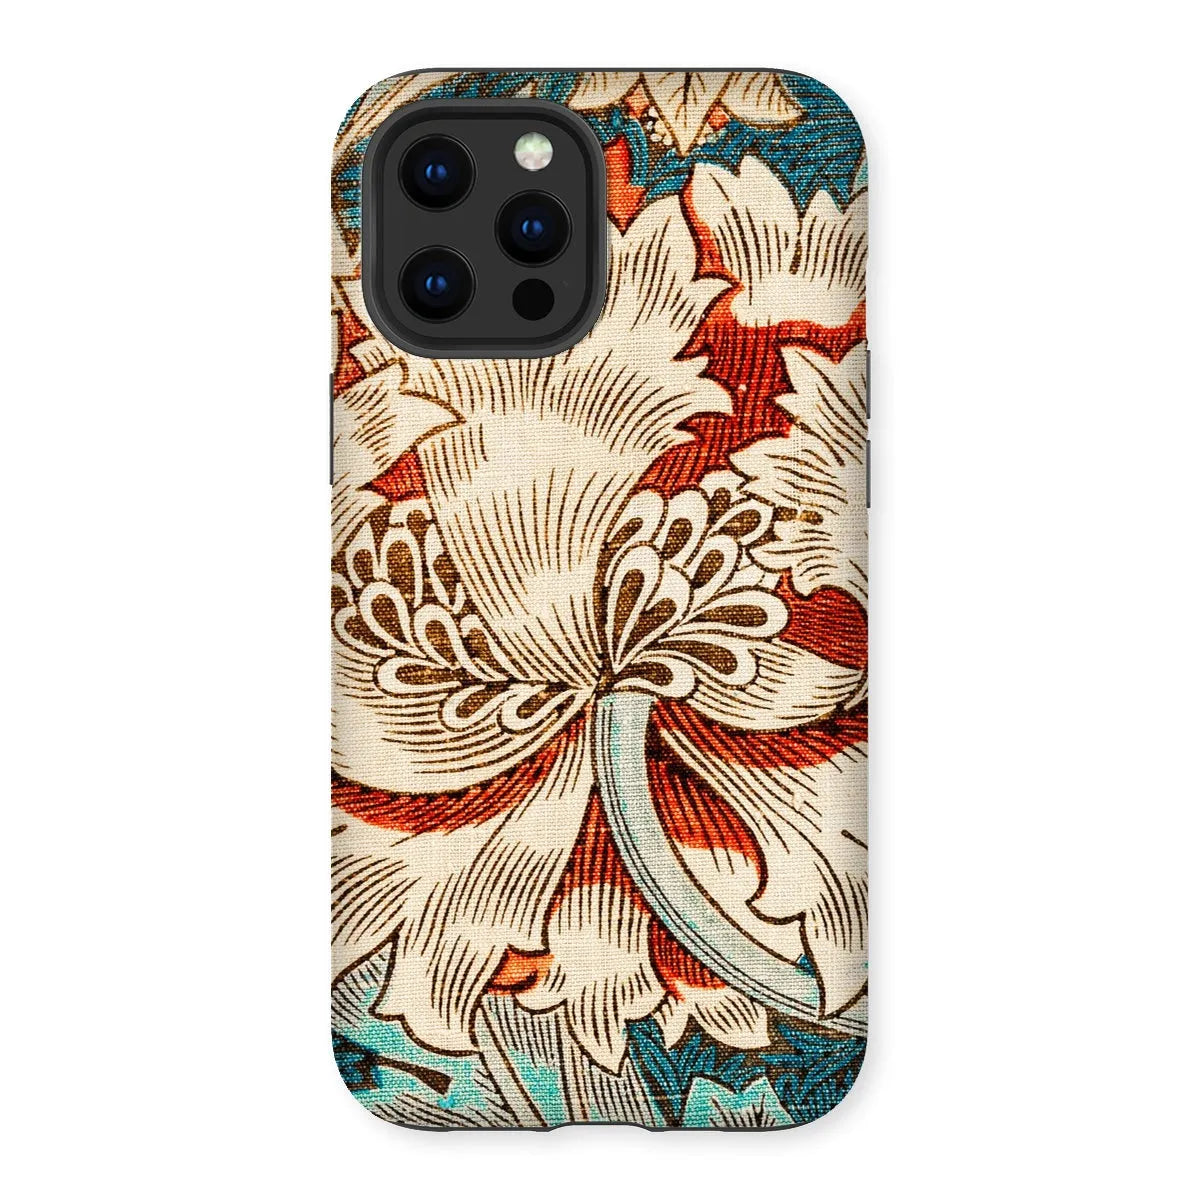 Honeysuckle Too By William Morris Phone Case - Iphone 12 Pro Max / Matte - Mobile Phone Cases - Aesthetic Art